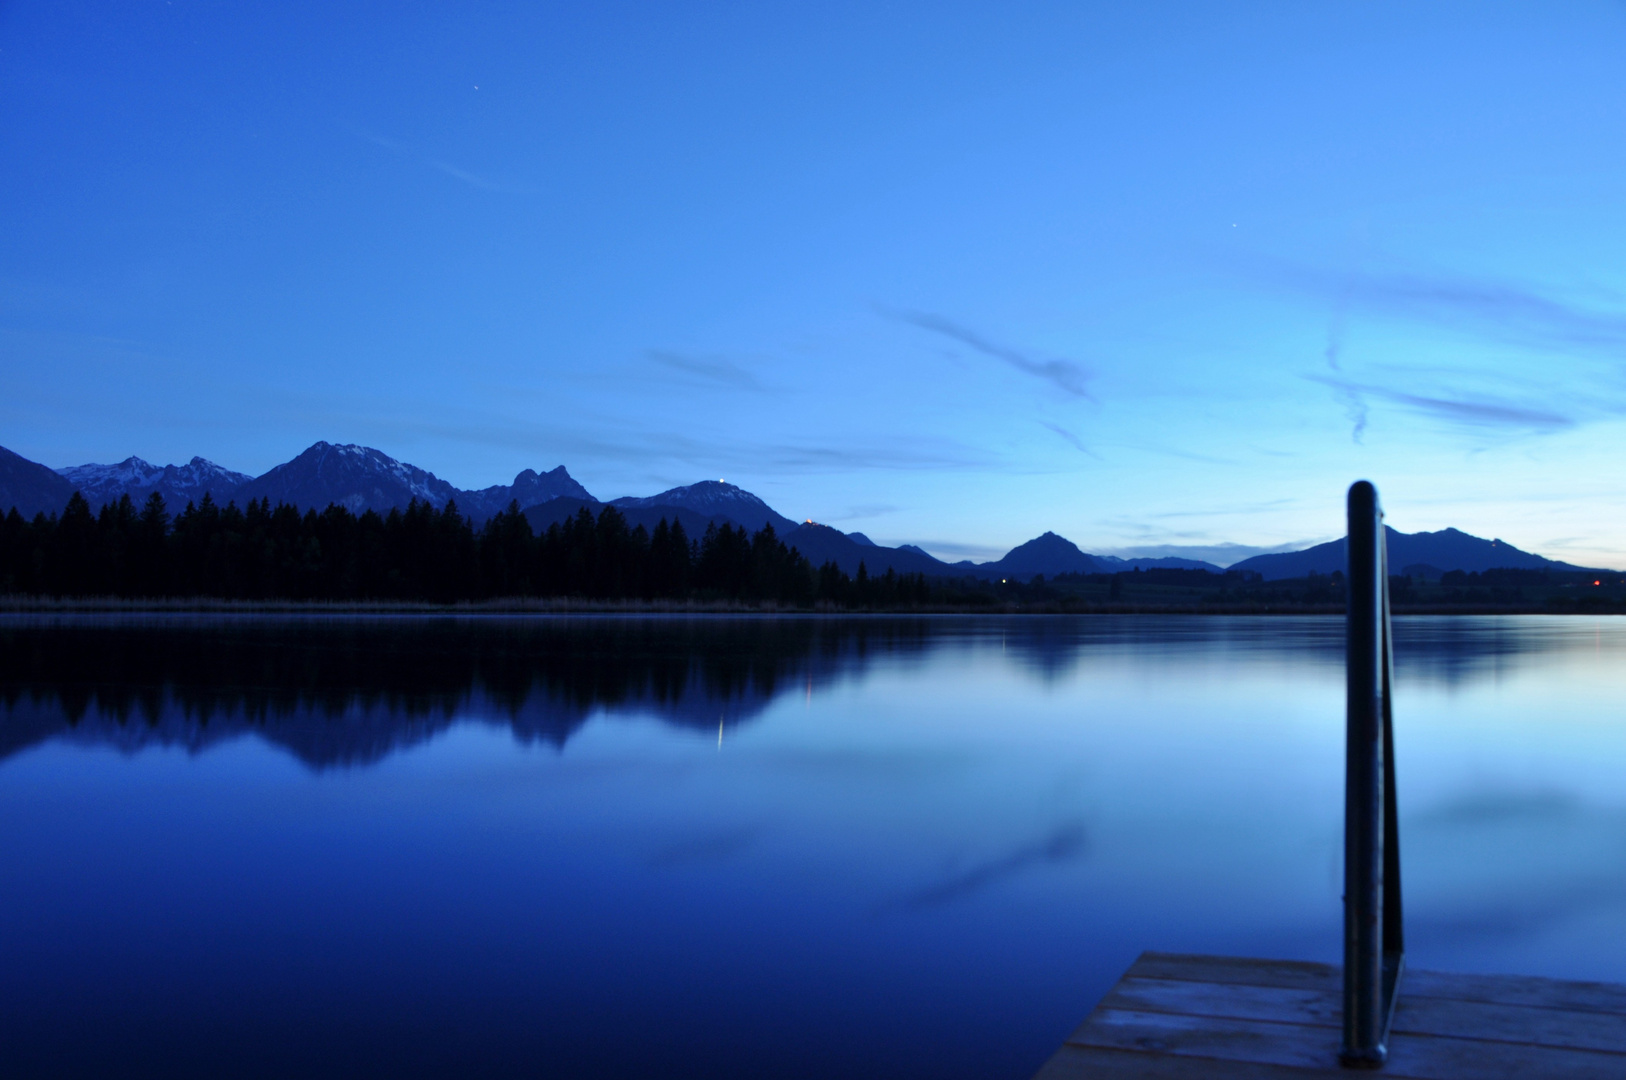 Mountain Lake at Blue Hour